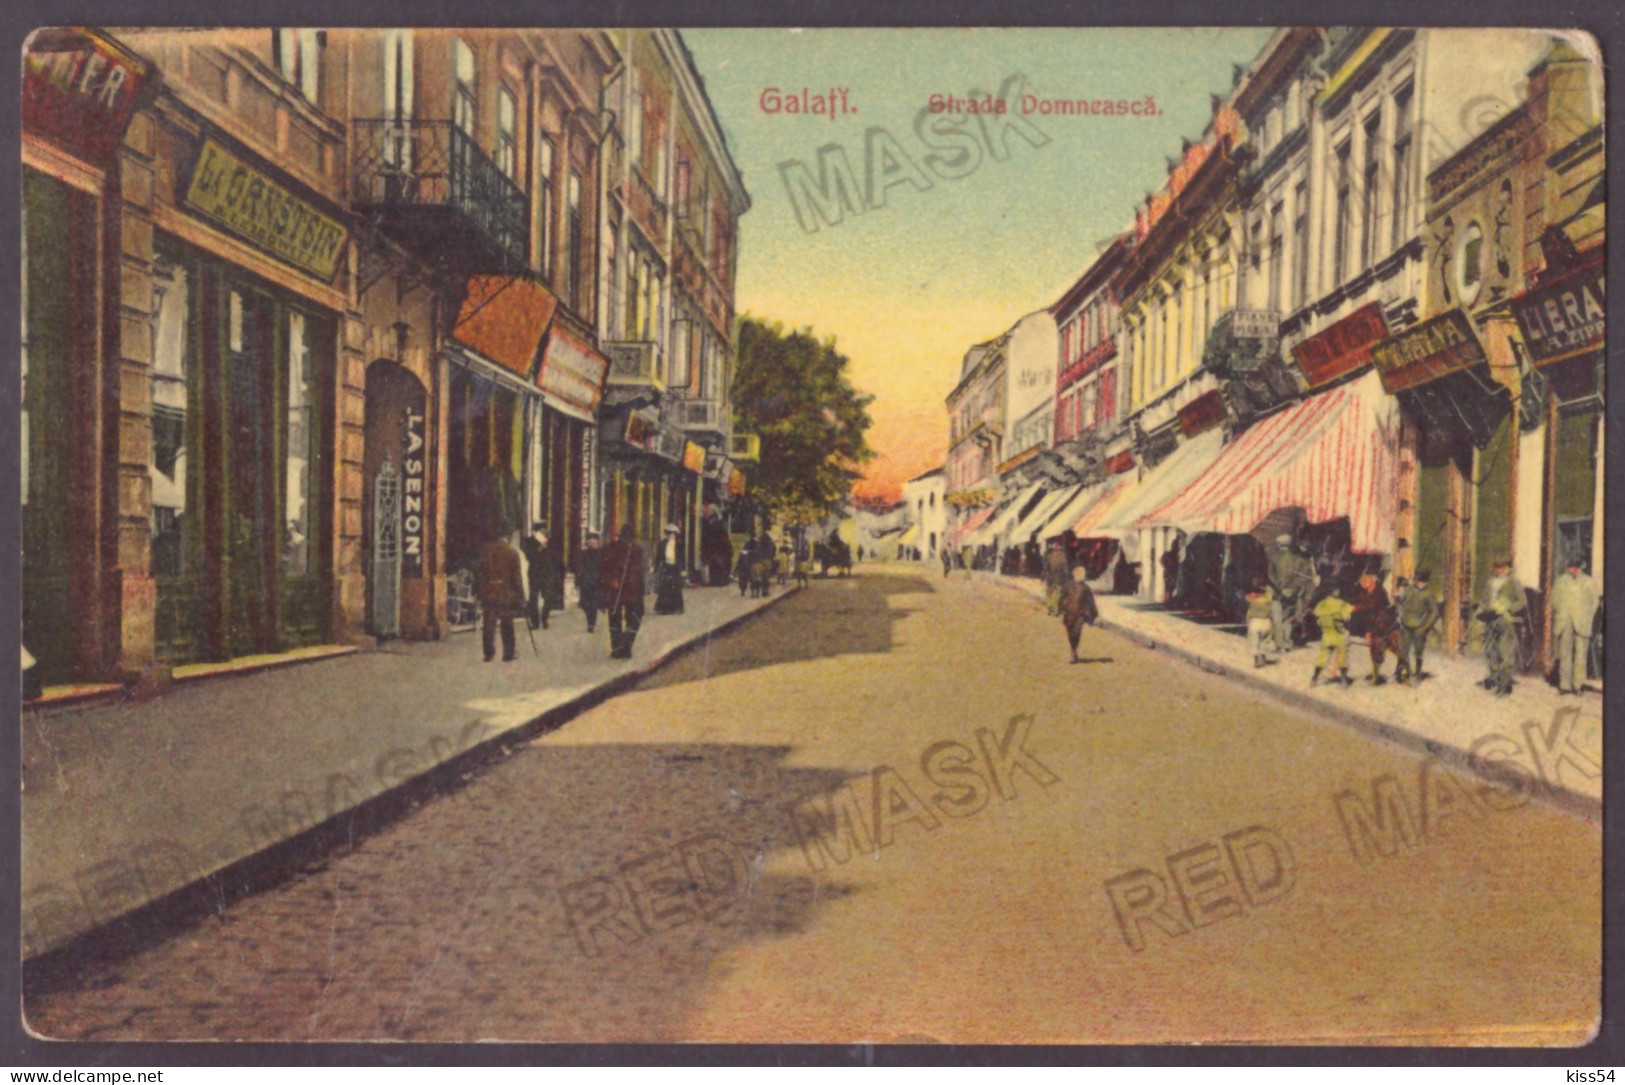 RO 40 - 23917 GALATI, Street Stores, Romania - Old Postcard - Used - 1911 - Roumanie